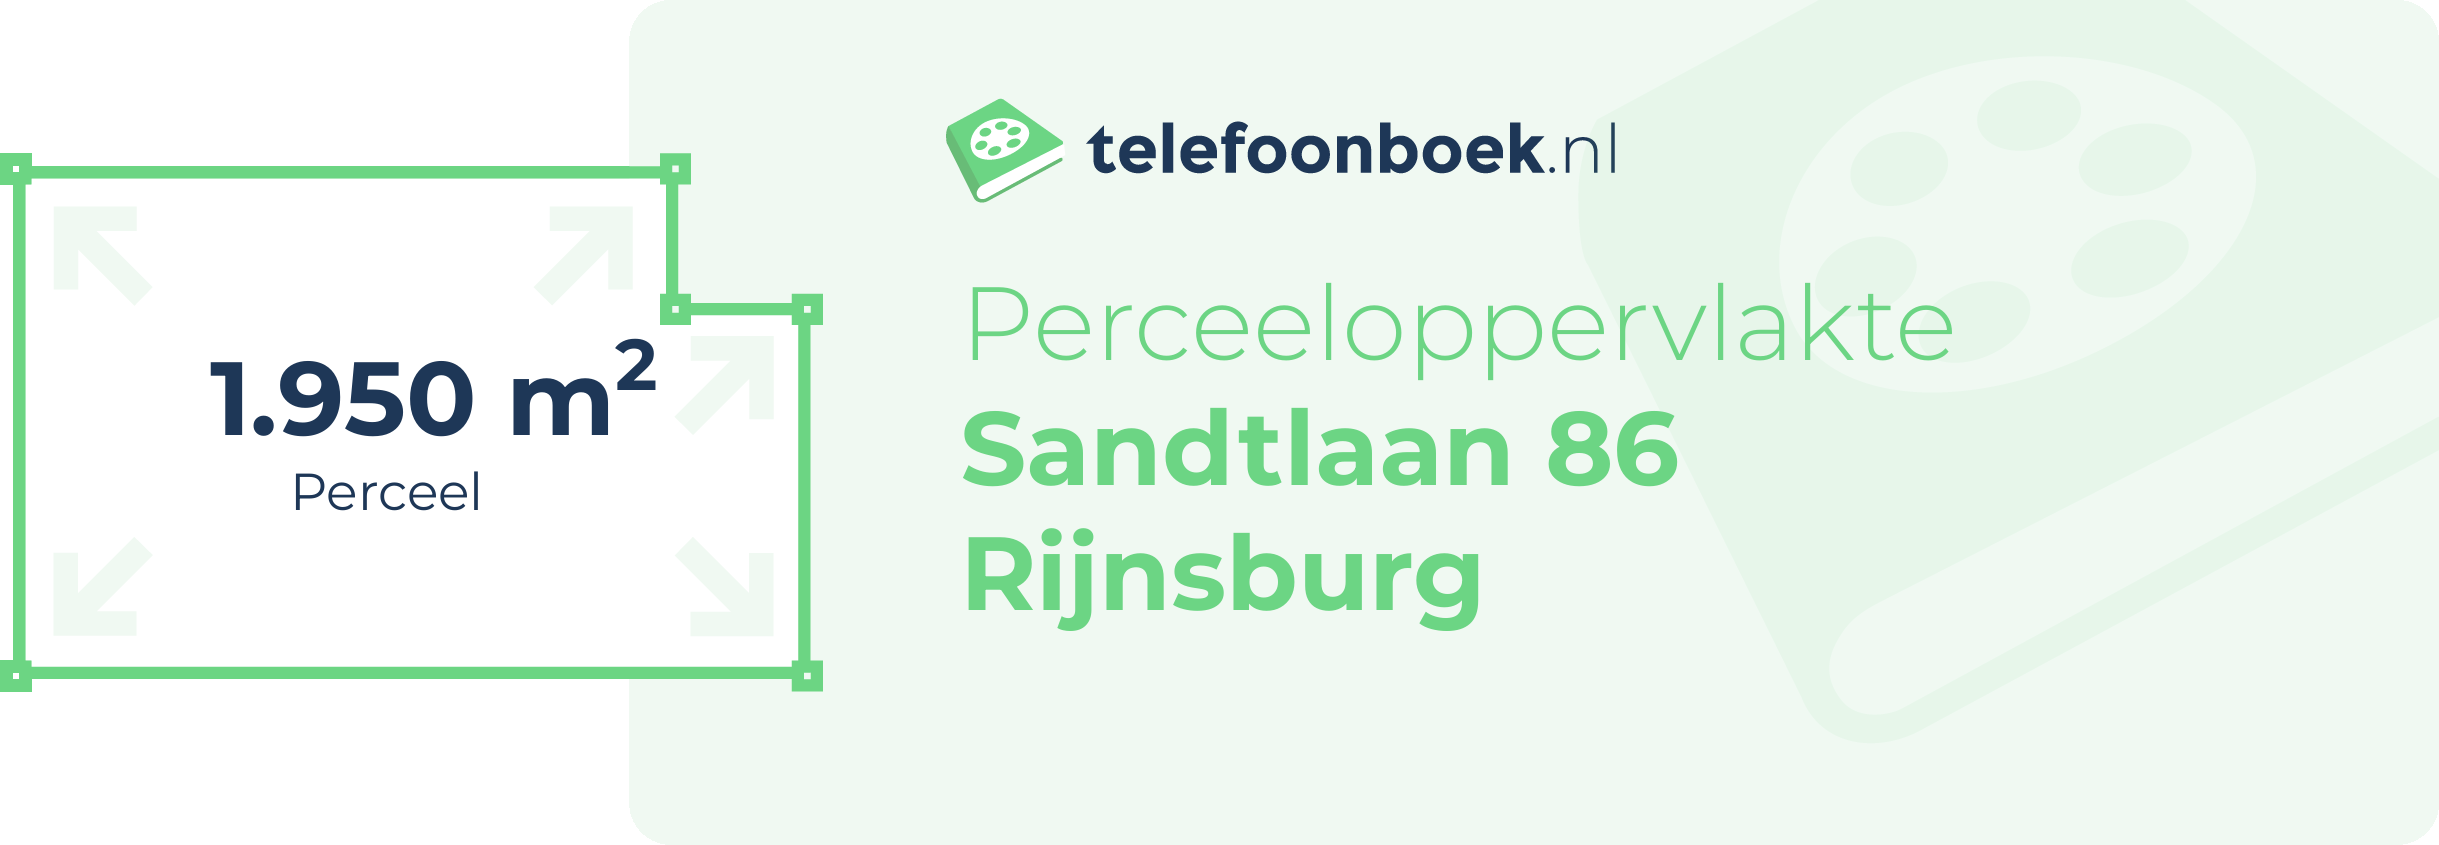 Perceeloppervlakte Sandtlaan 86 Rijnsburg